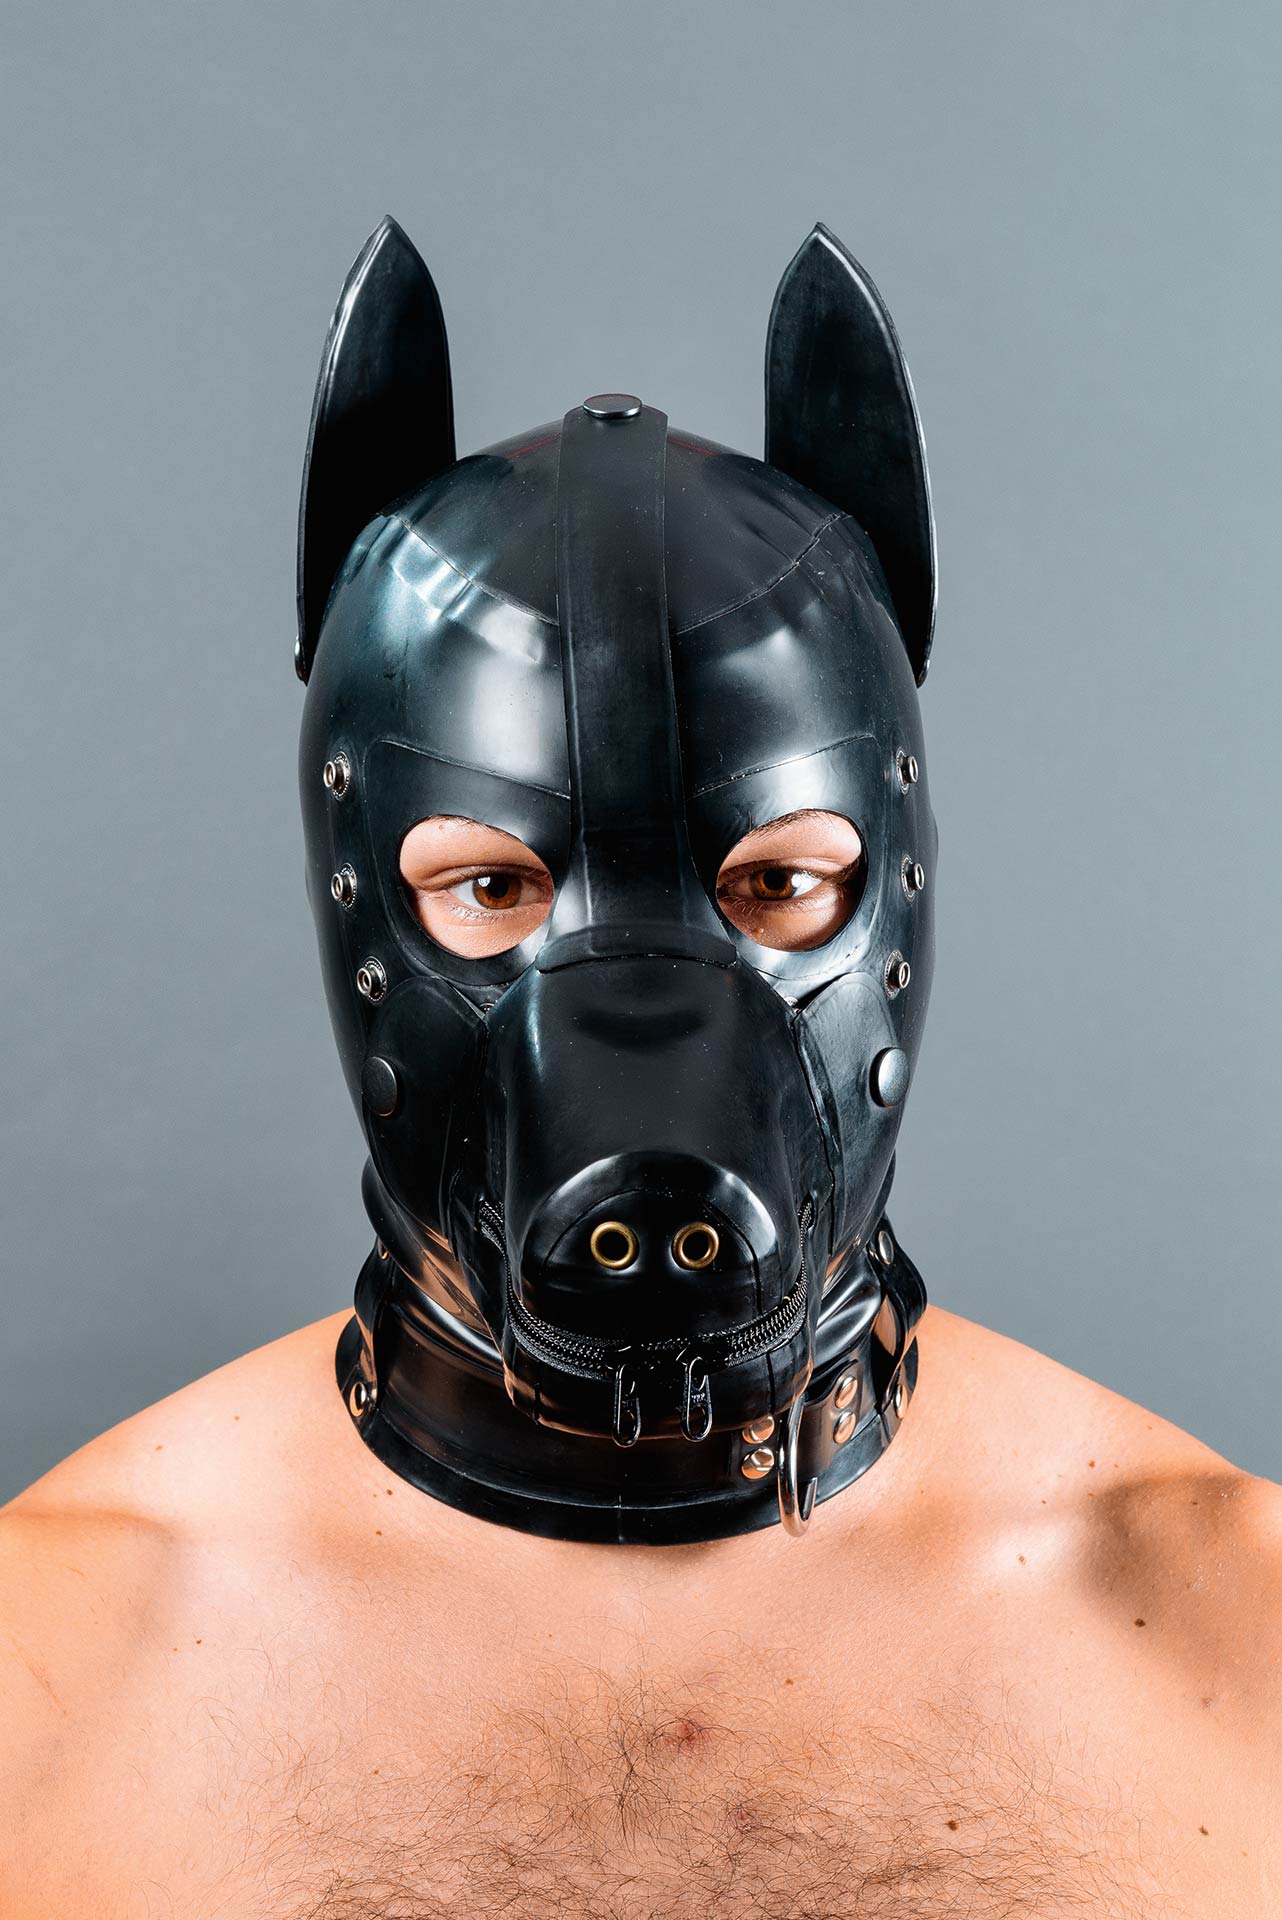 dog play (32 года) (Фото!) хочет завязать садо-мазо знакомство (№4487680) » Садо-мазо » Boys.lv